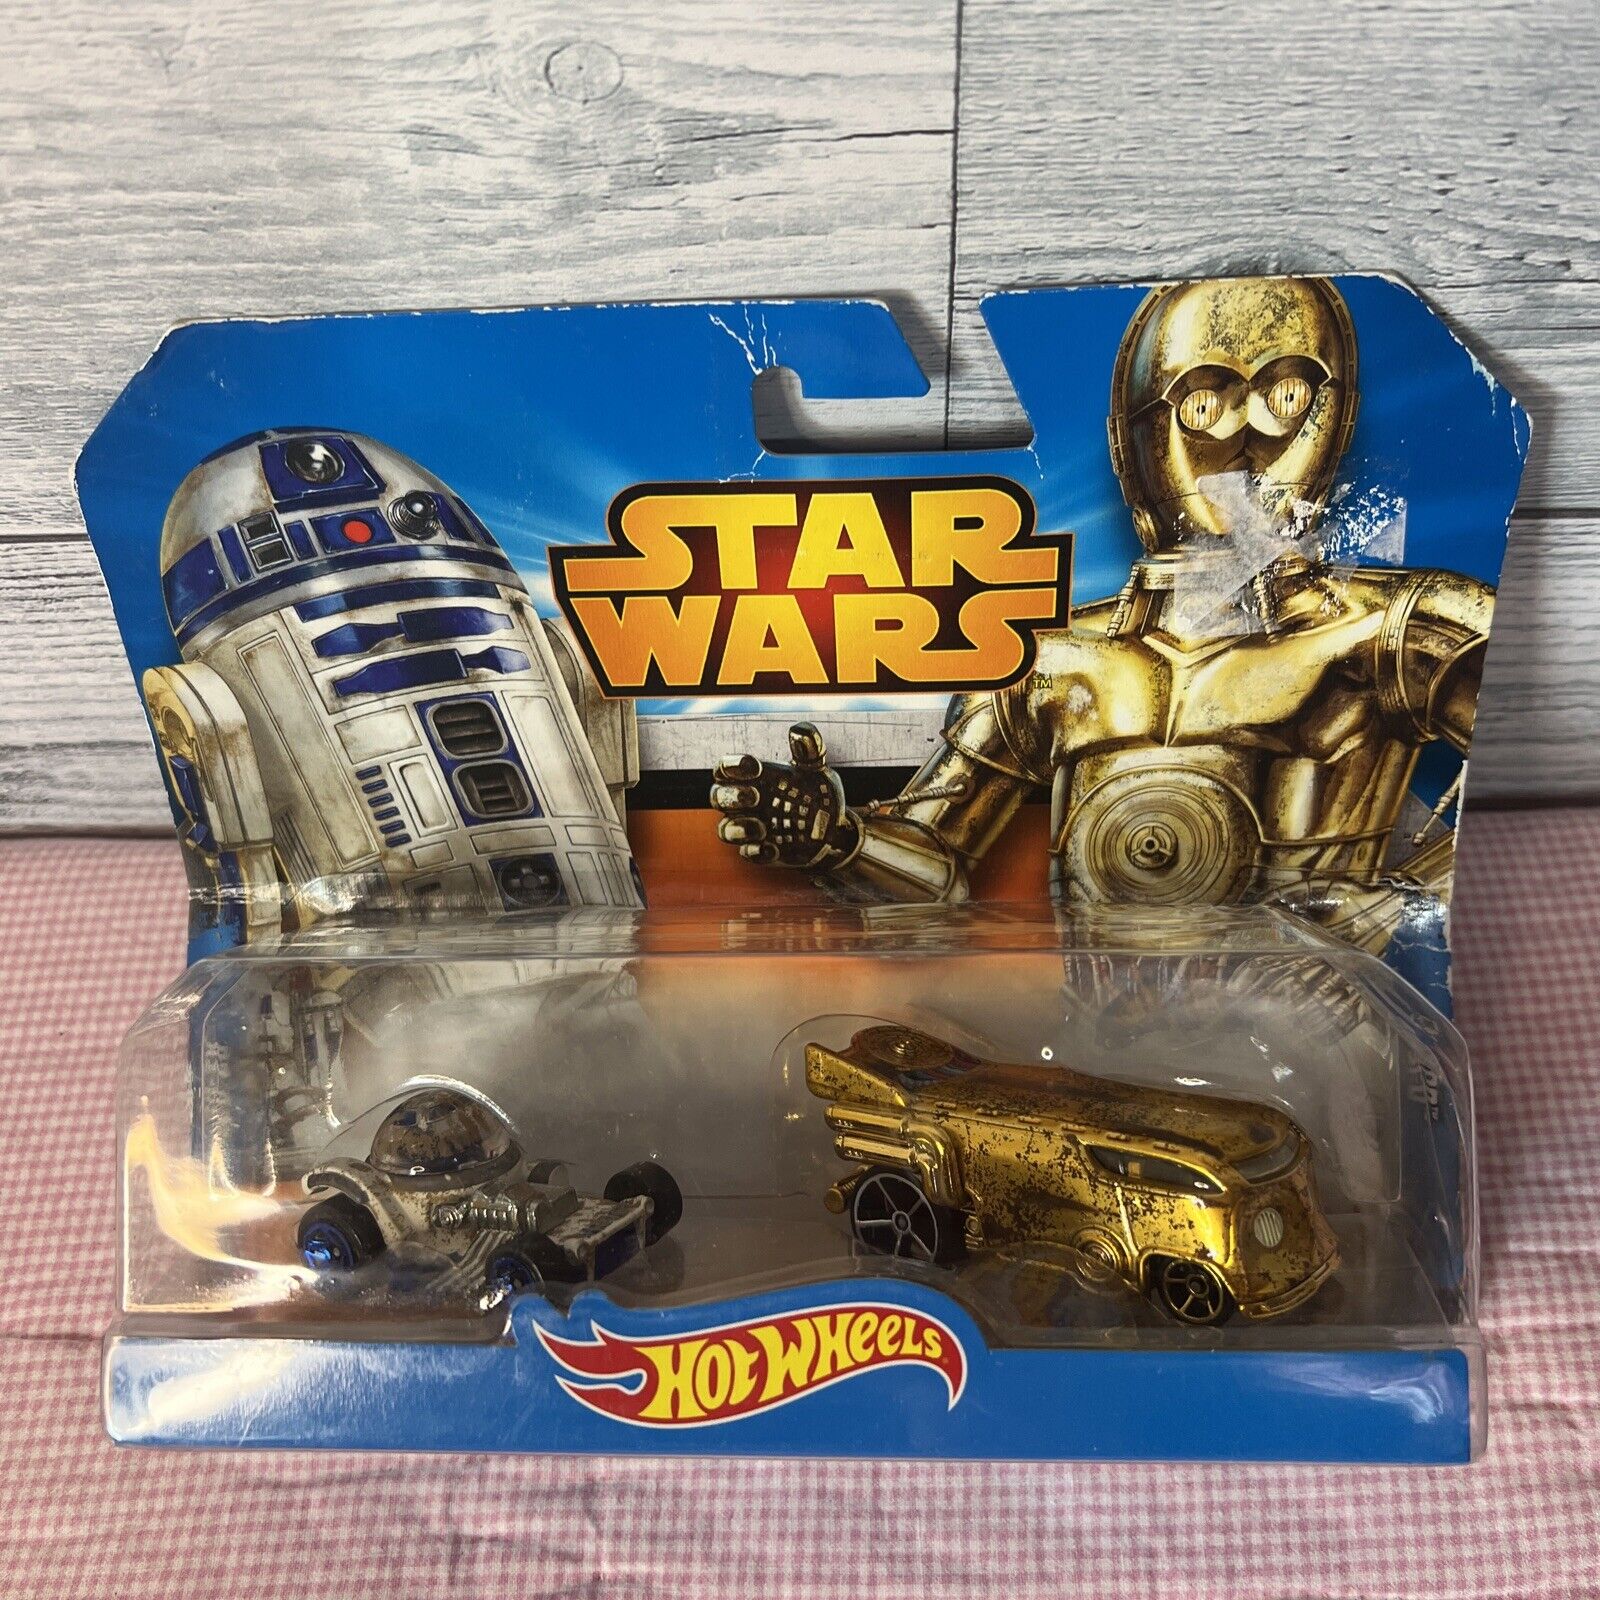 Disney Pixar Cars Figuren Star Wars Darsteller Weekends 2013 Yoda C-3PO R2-D2 